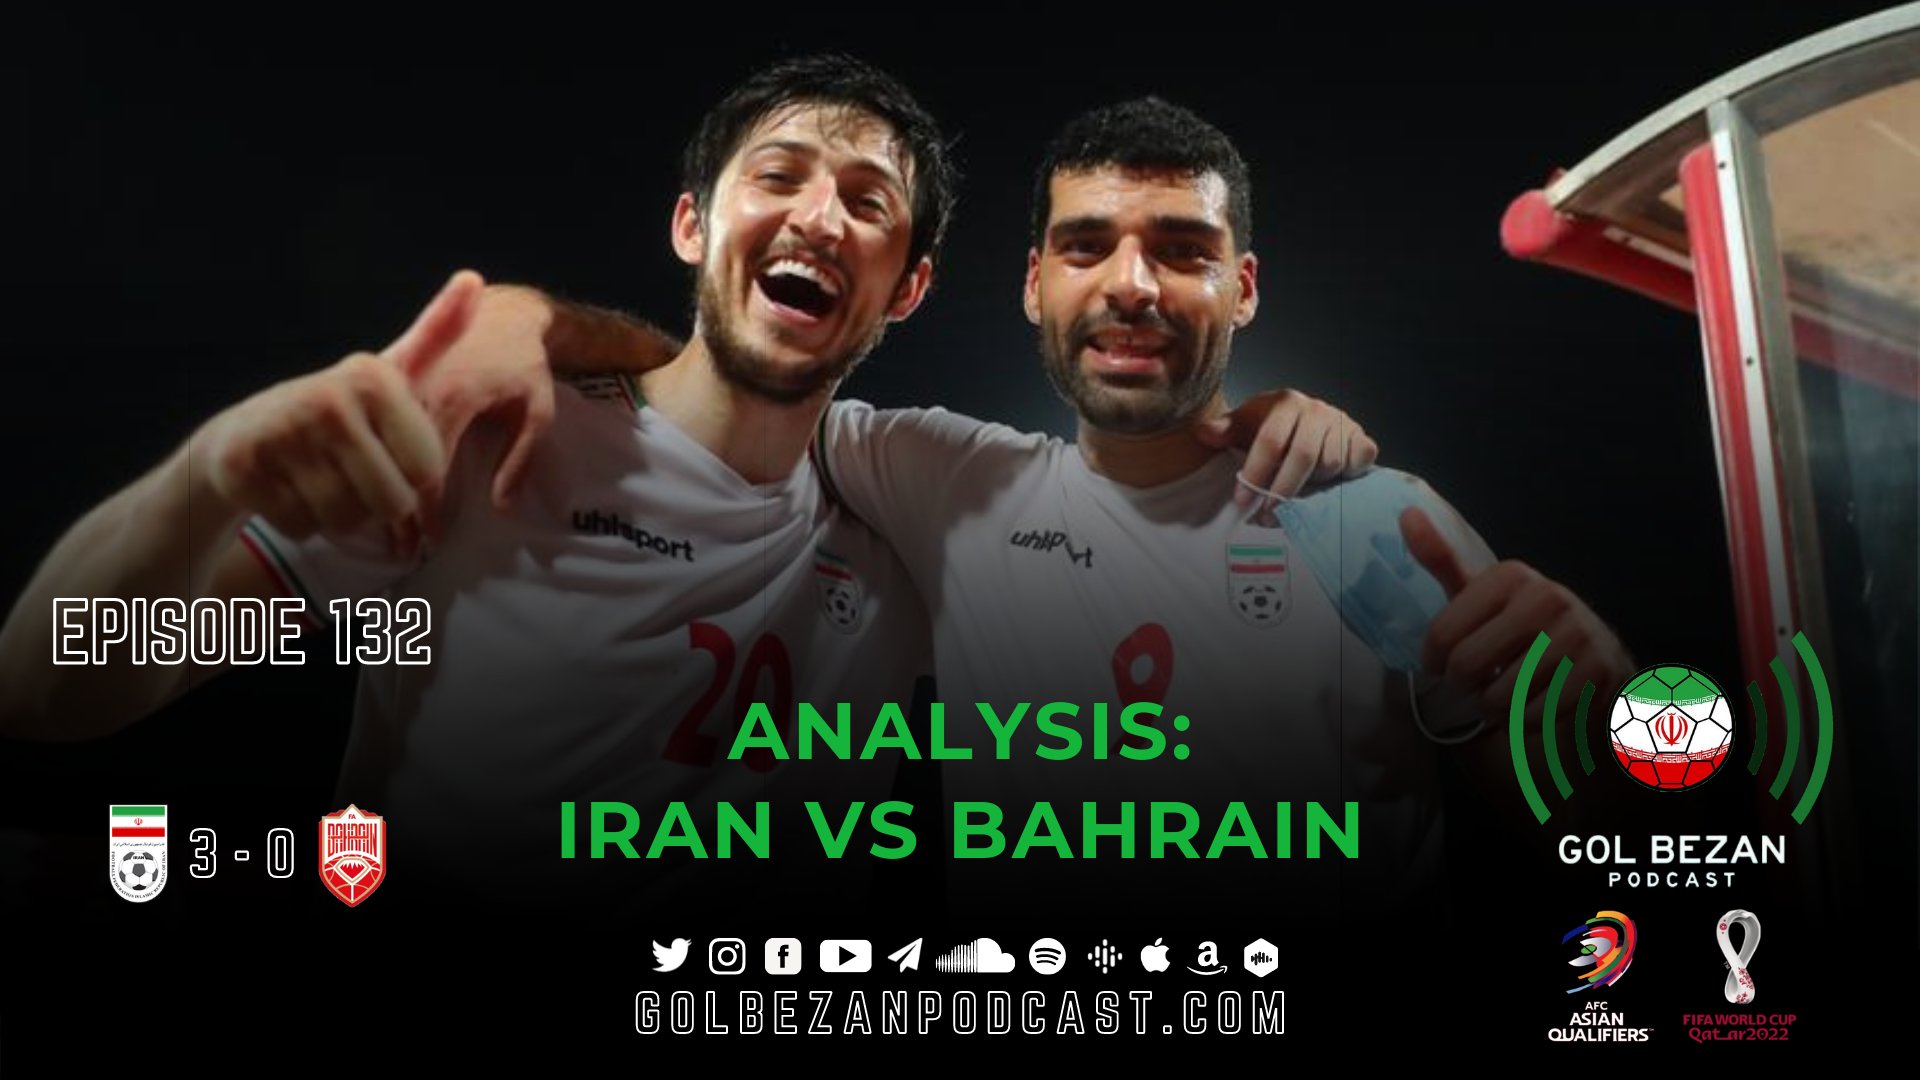 Analysis: Iran 3 - 0 Bahrain